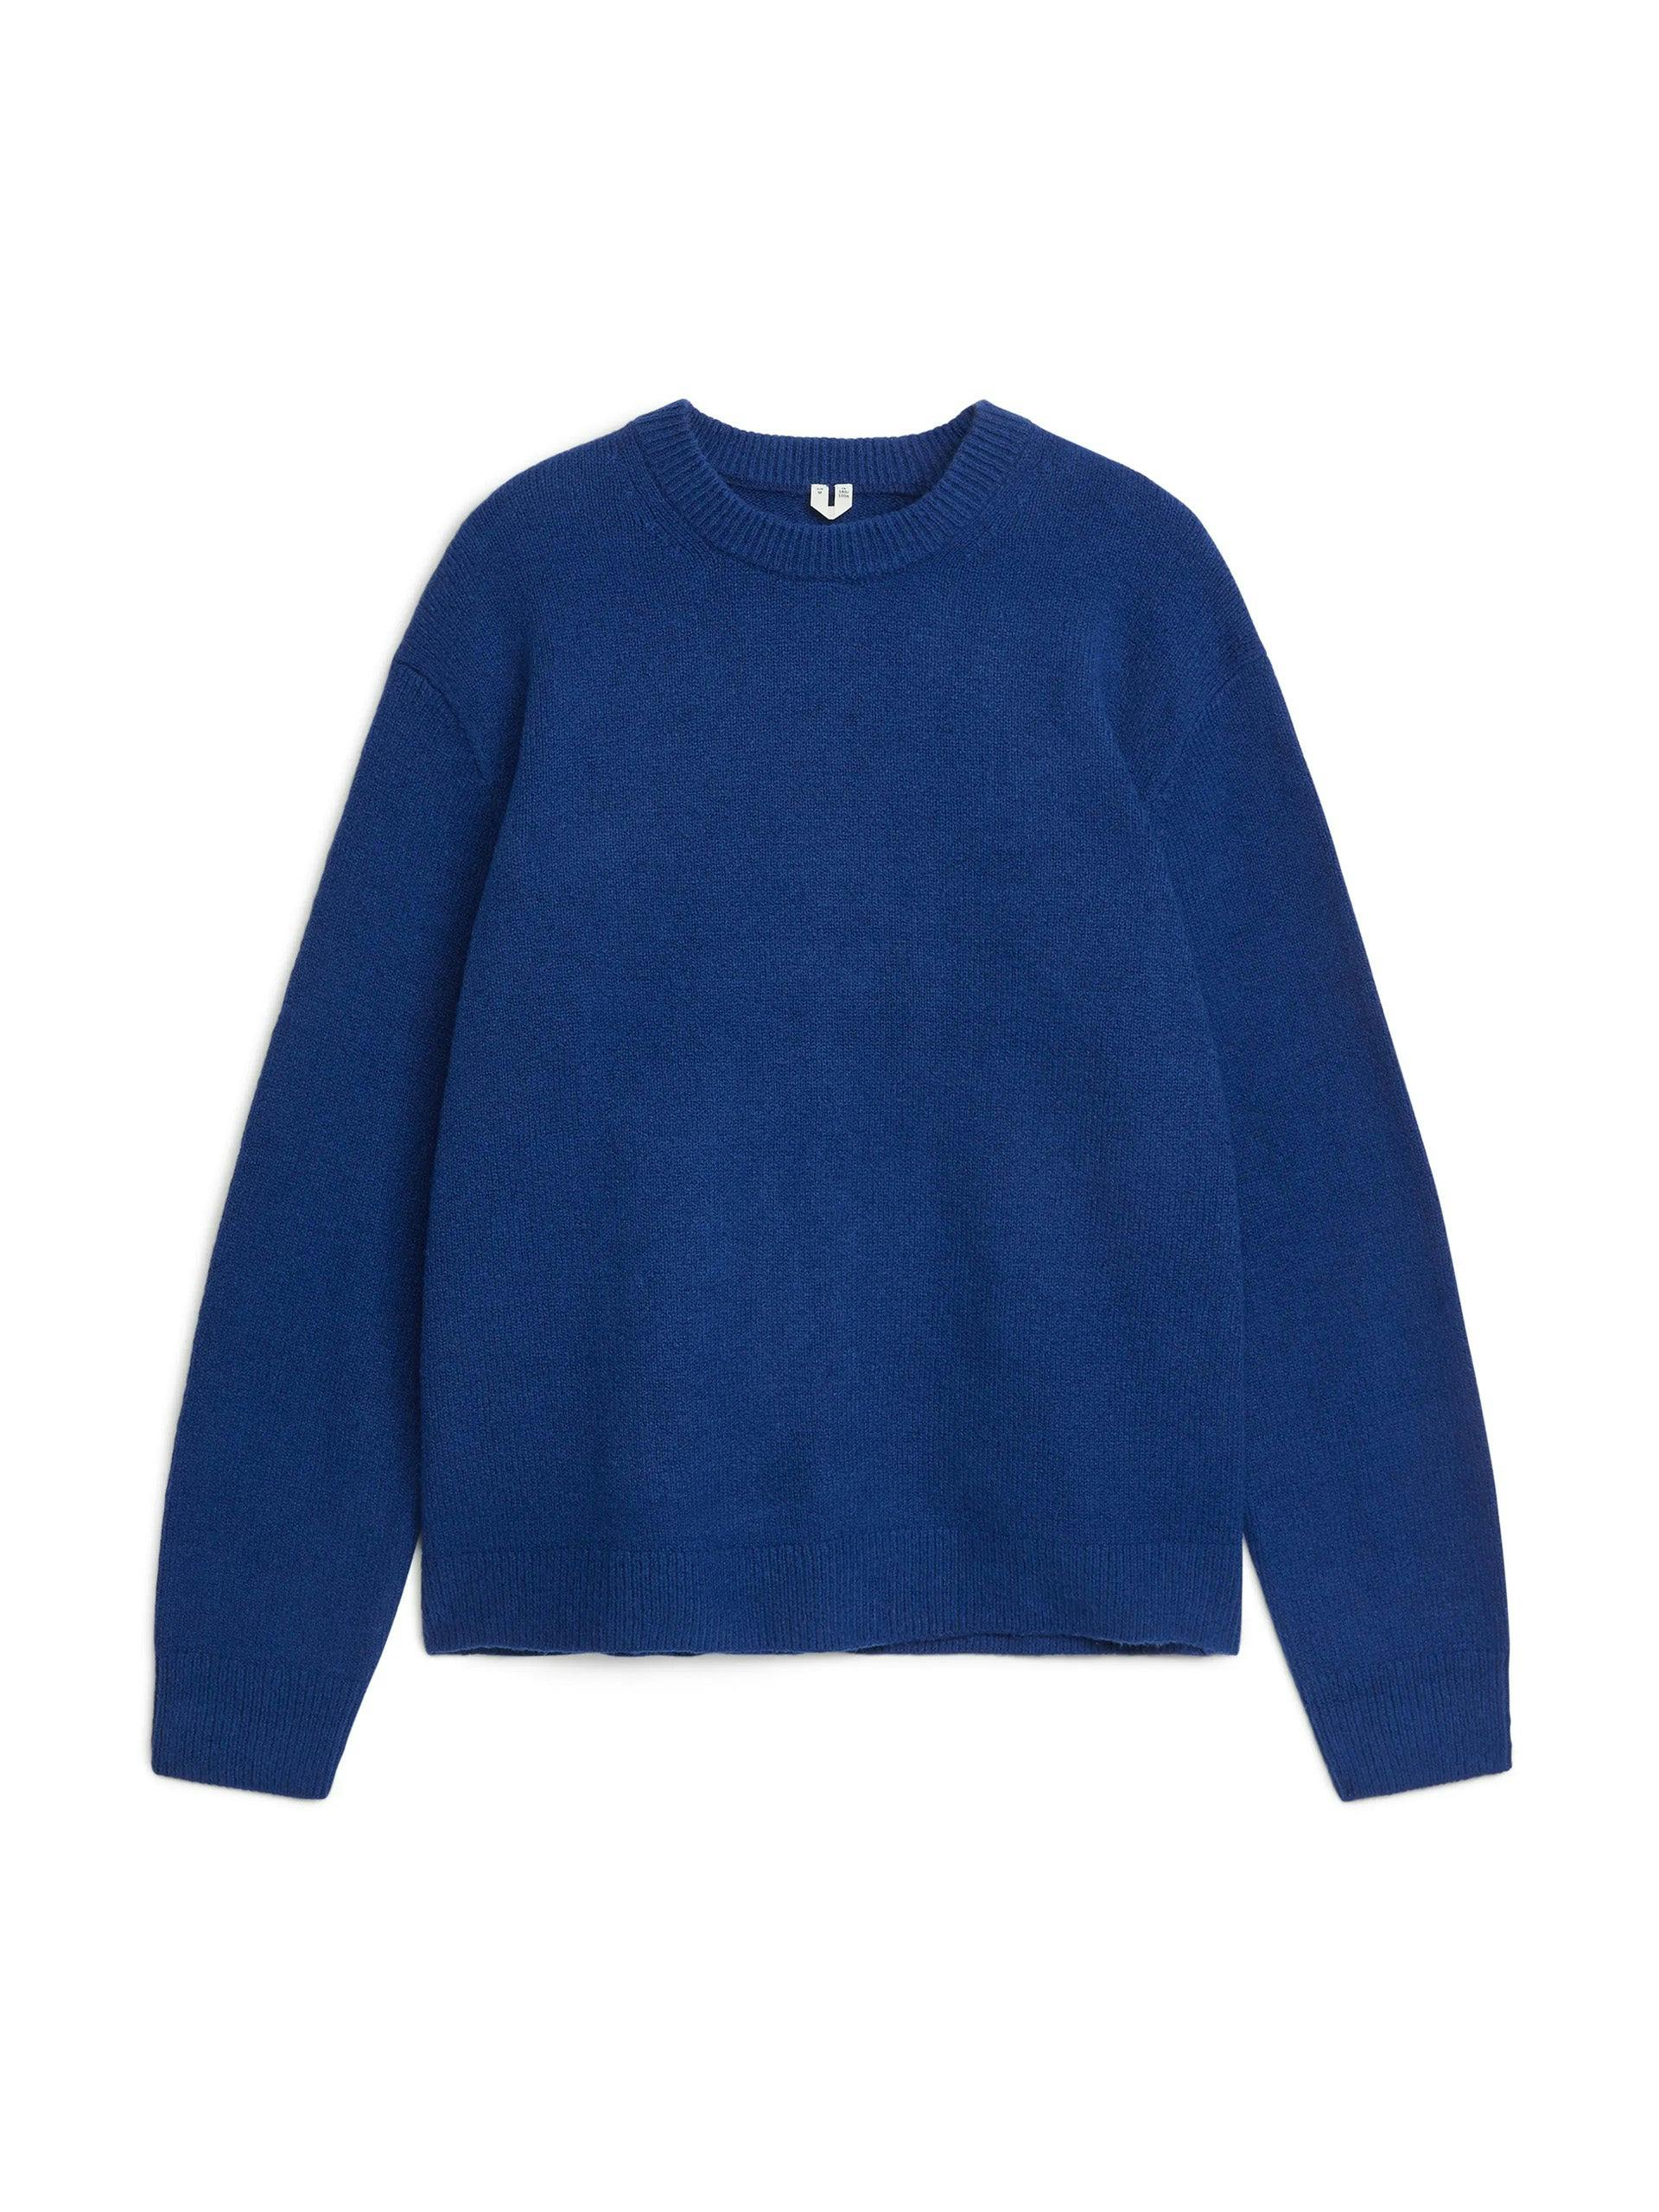 Blue cotton-blend jumper